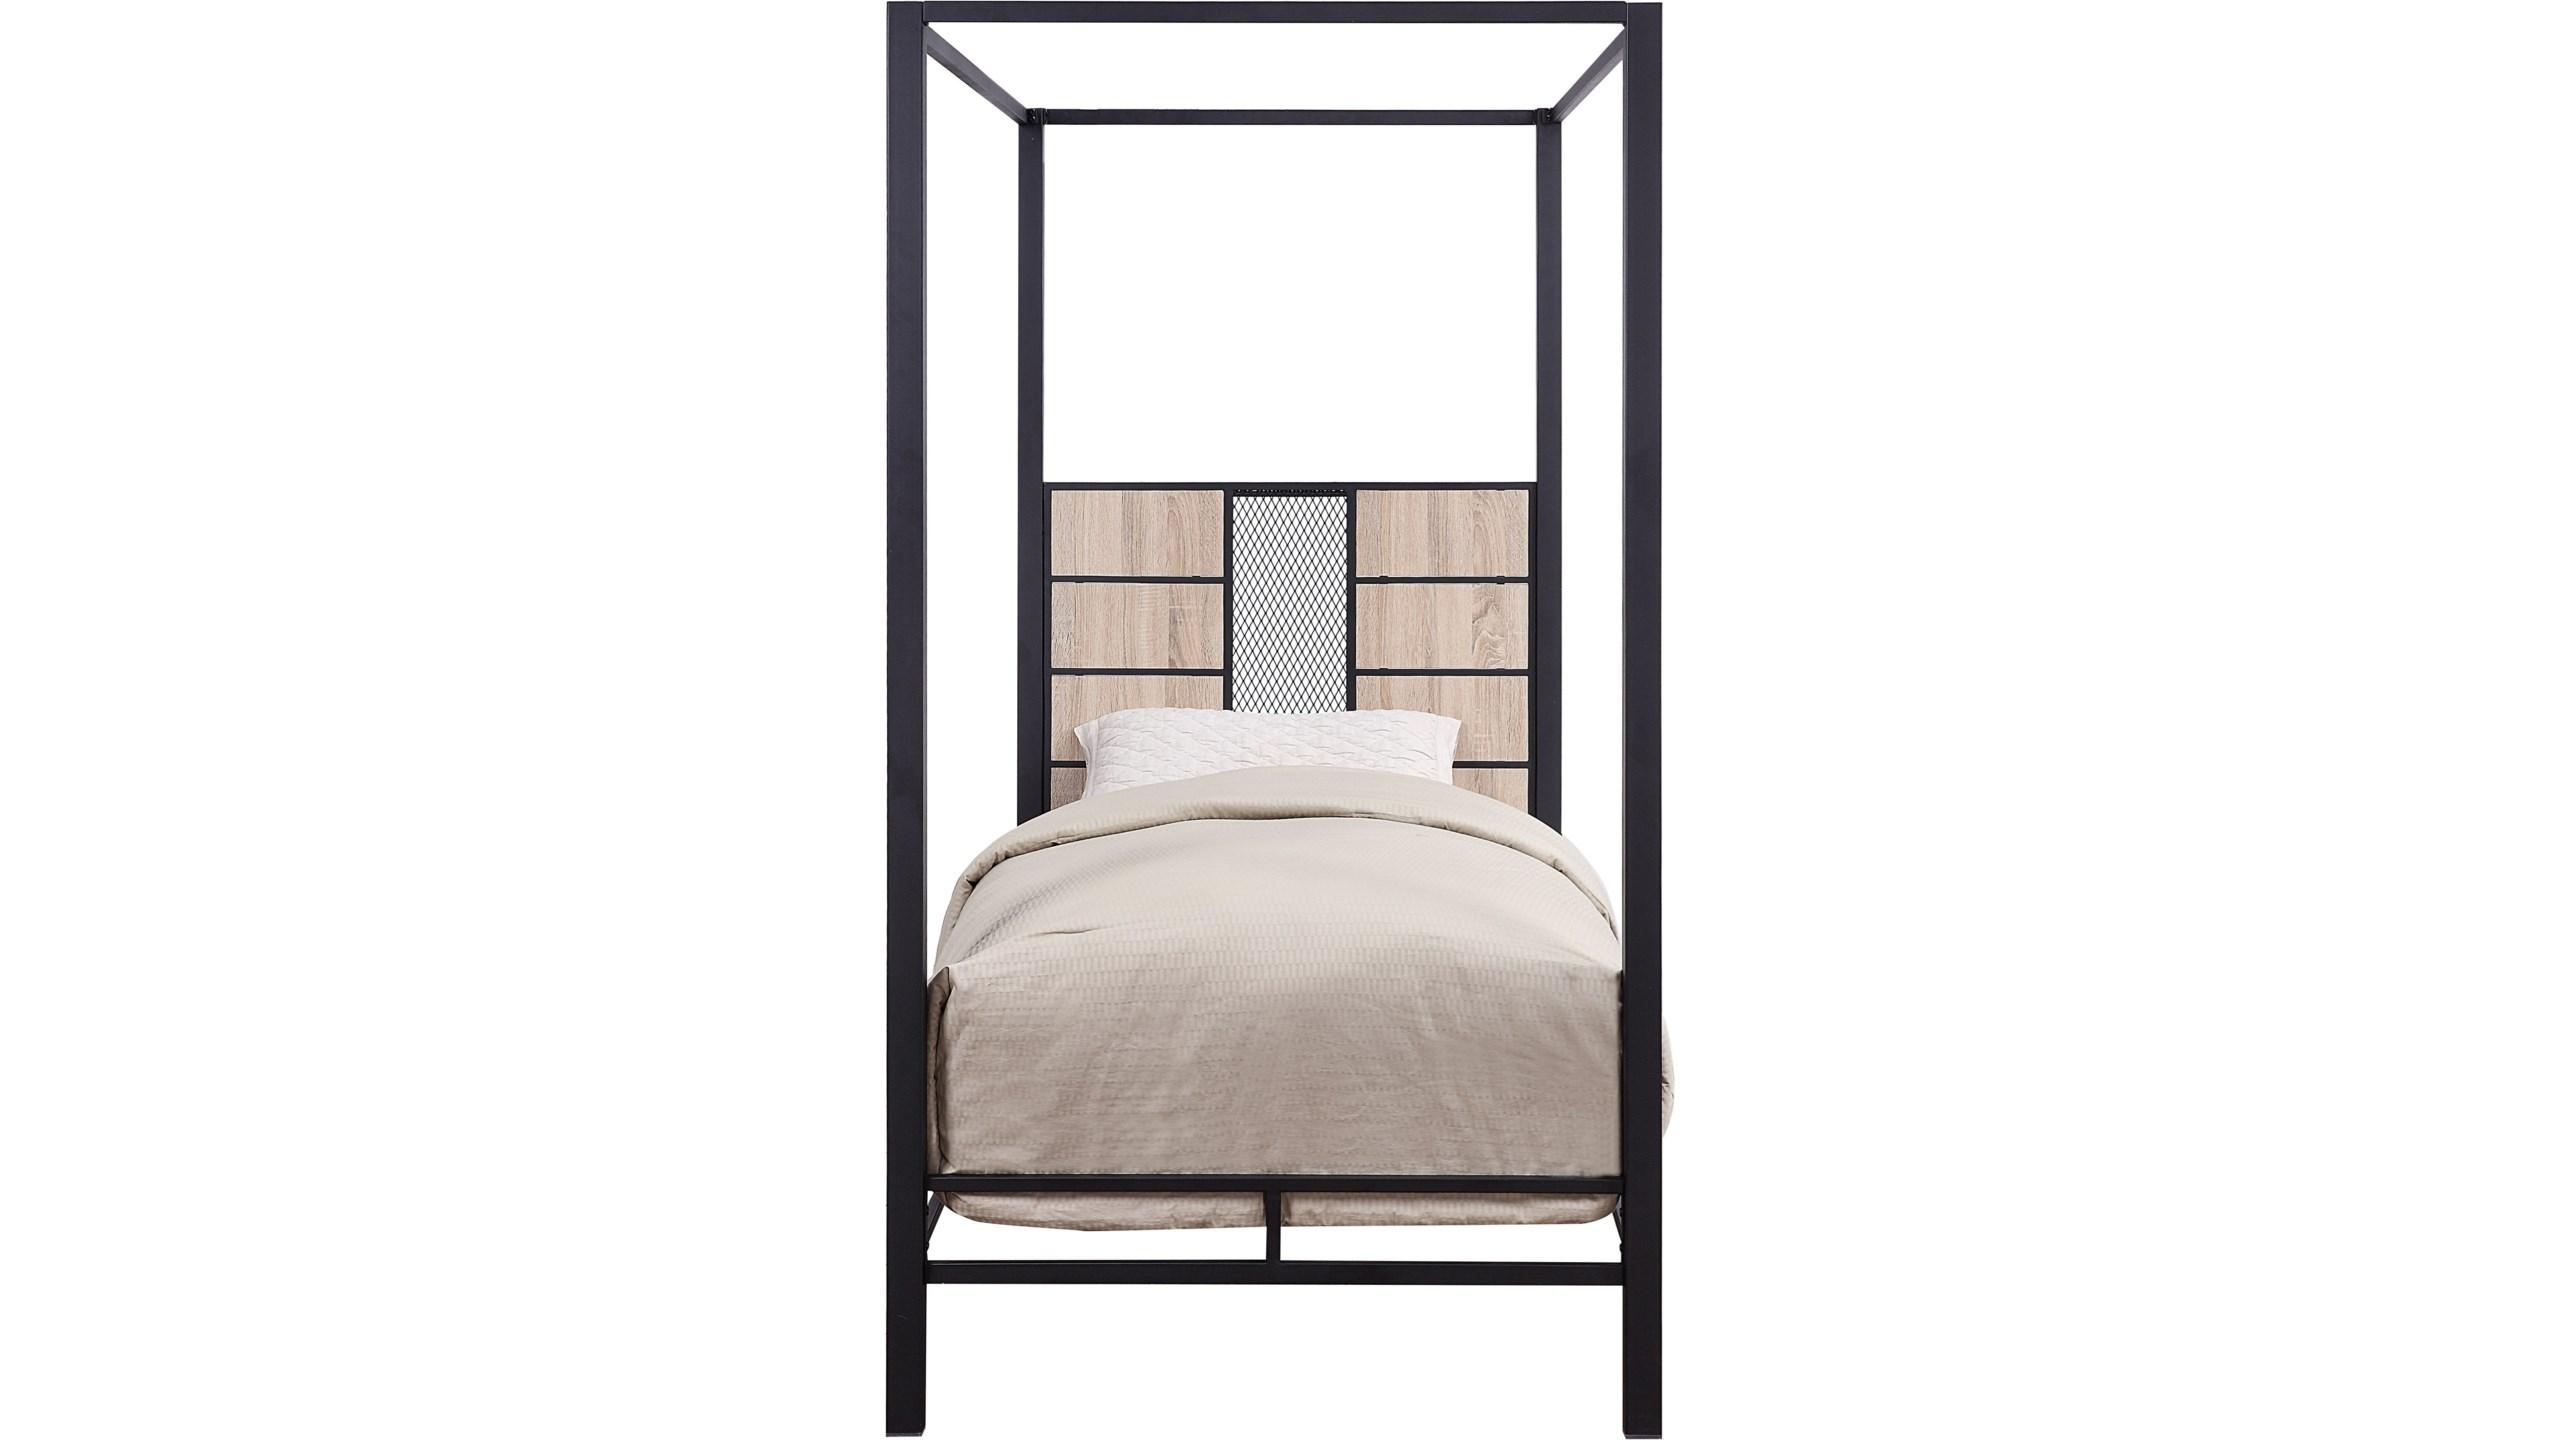 

    
Contemporary Natural & Sandy Gray Twin 4pcs Bedroom Set by Acme Baara 22050T-4pcs
